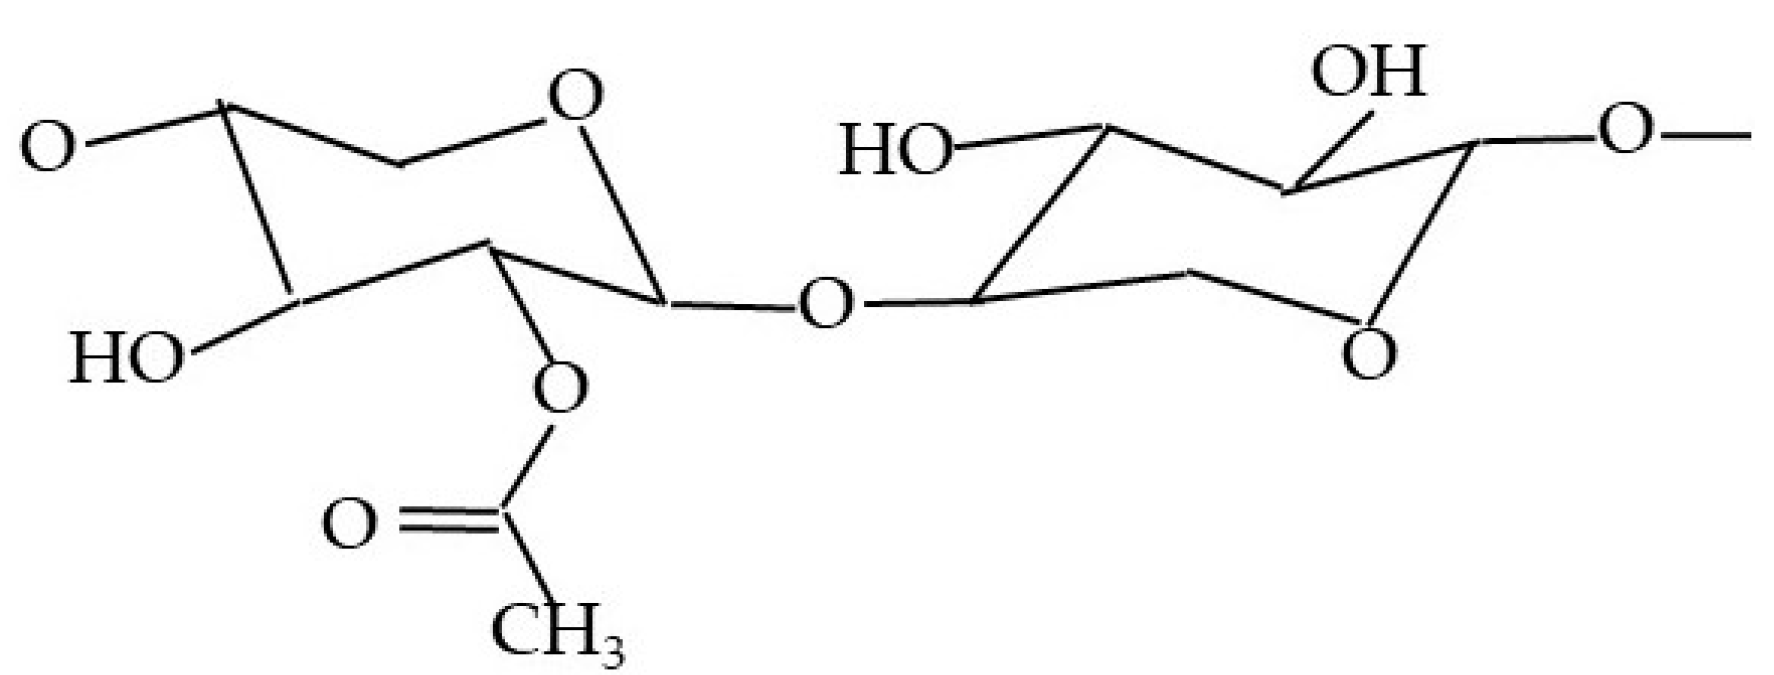 hemicellulose composition